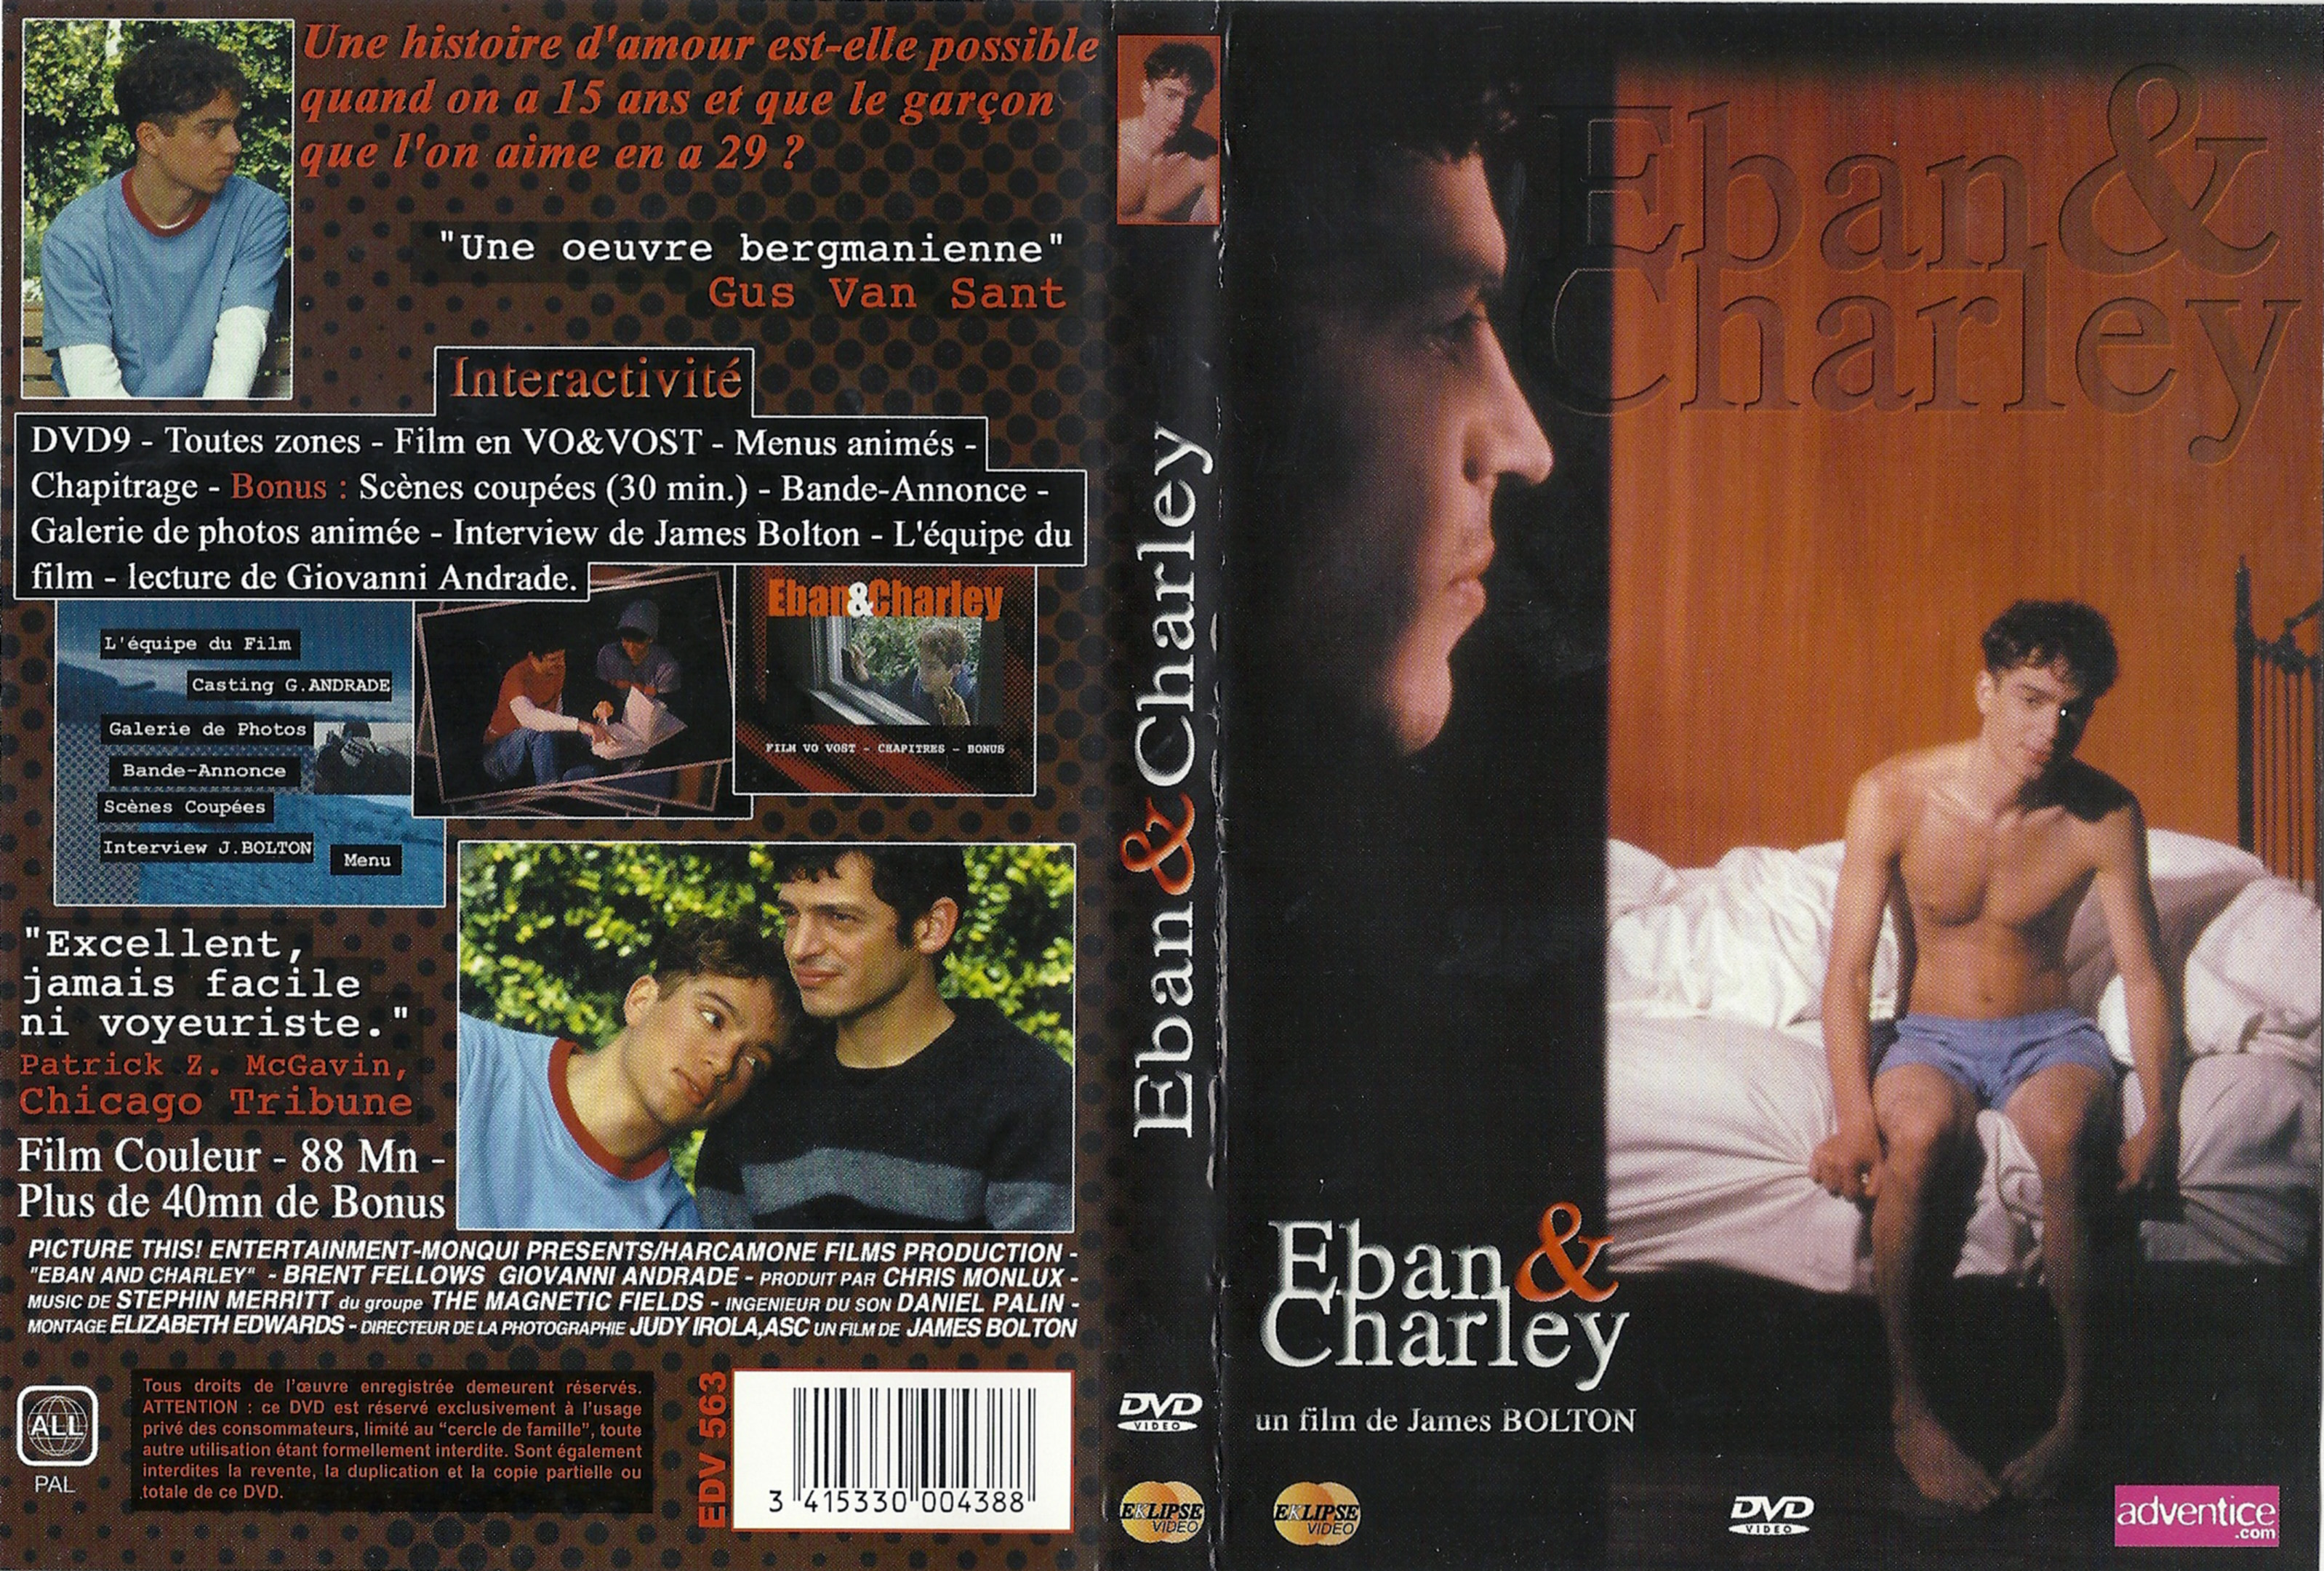 Jaquette DVD Eban & Charley